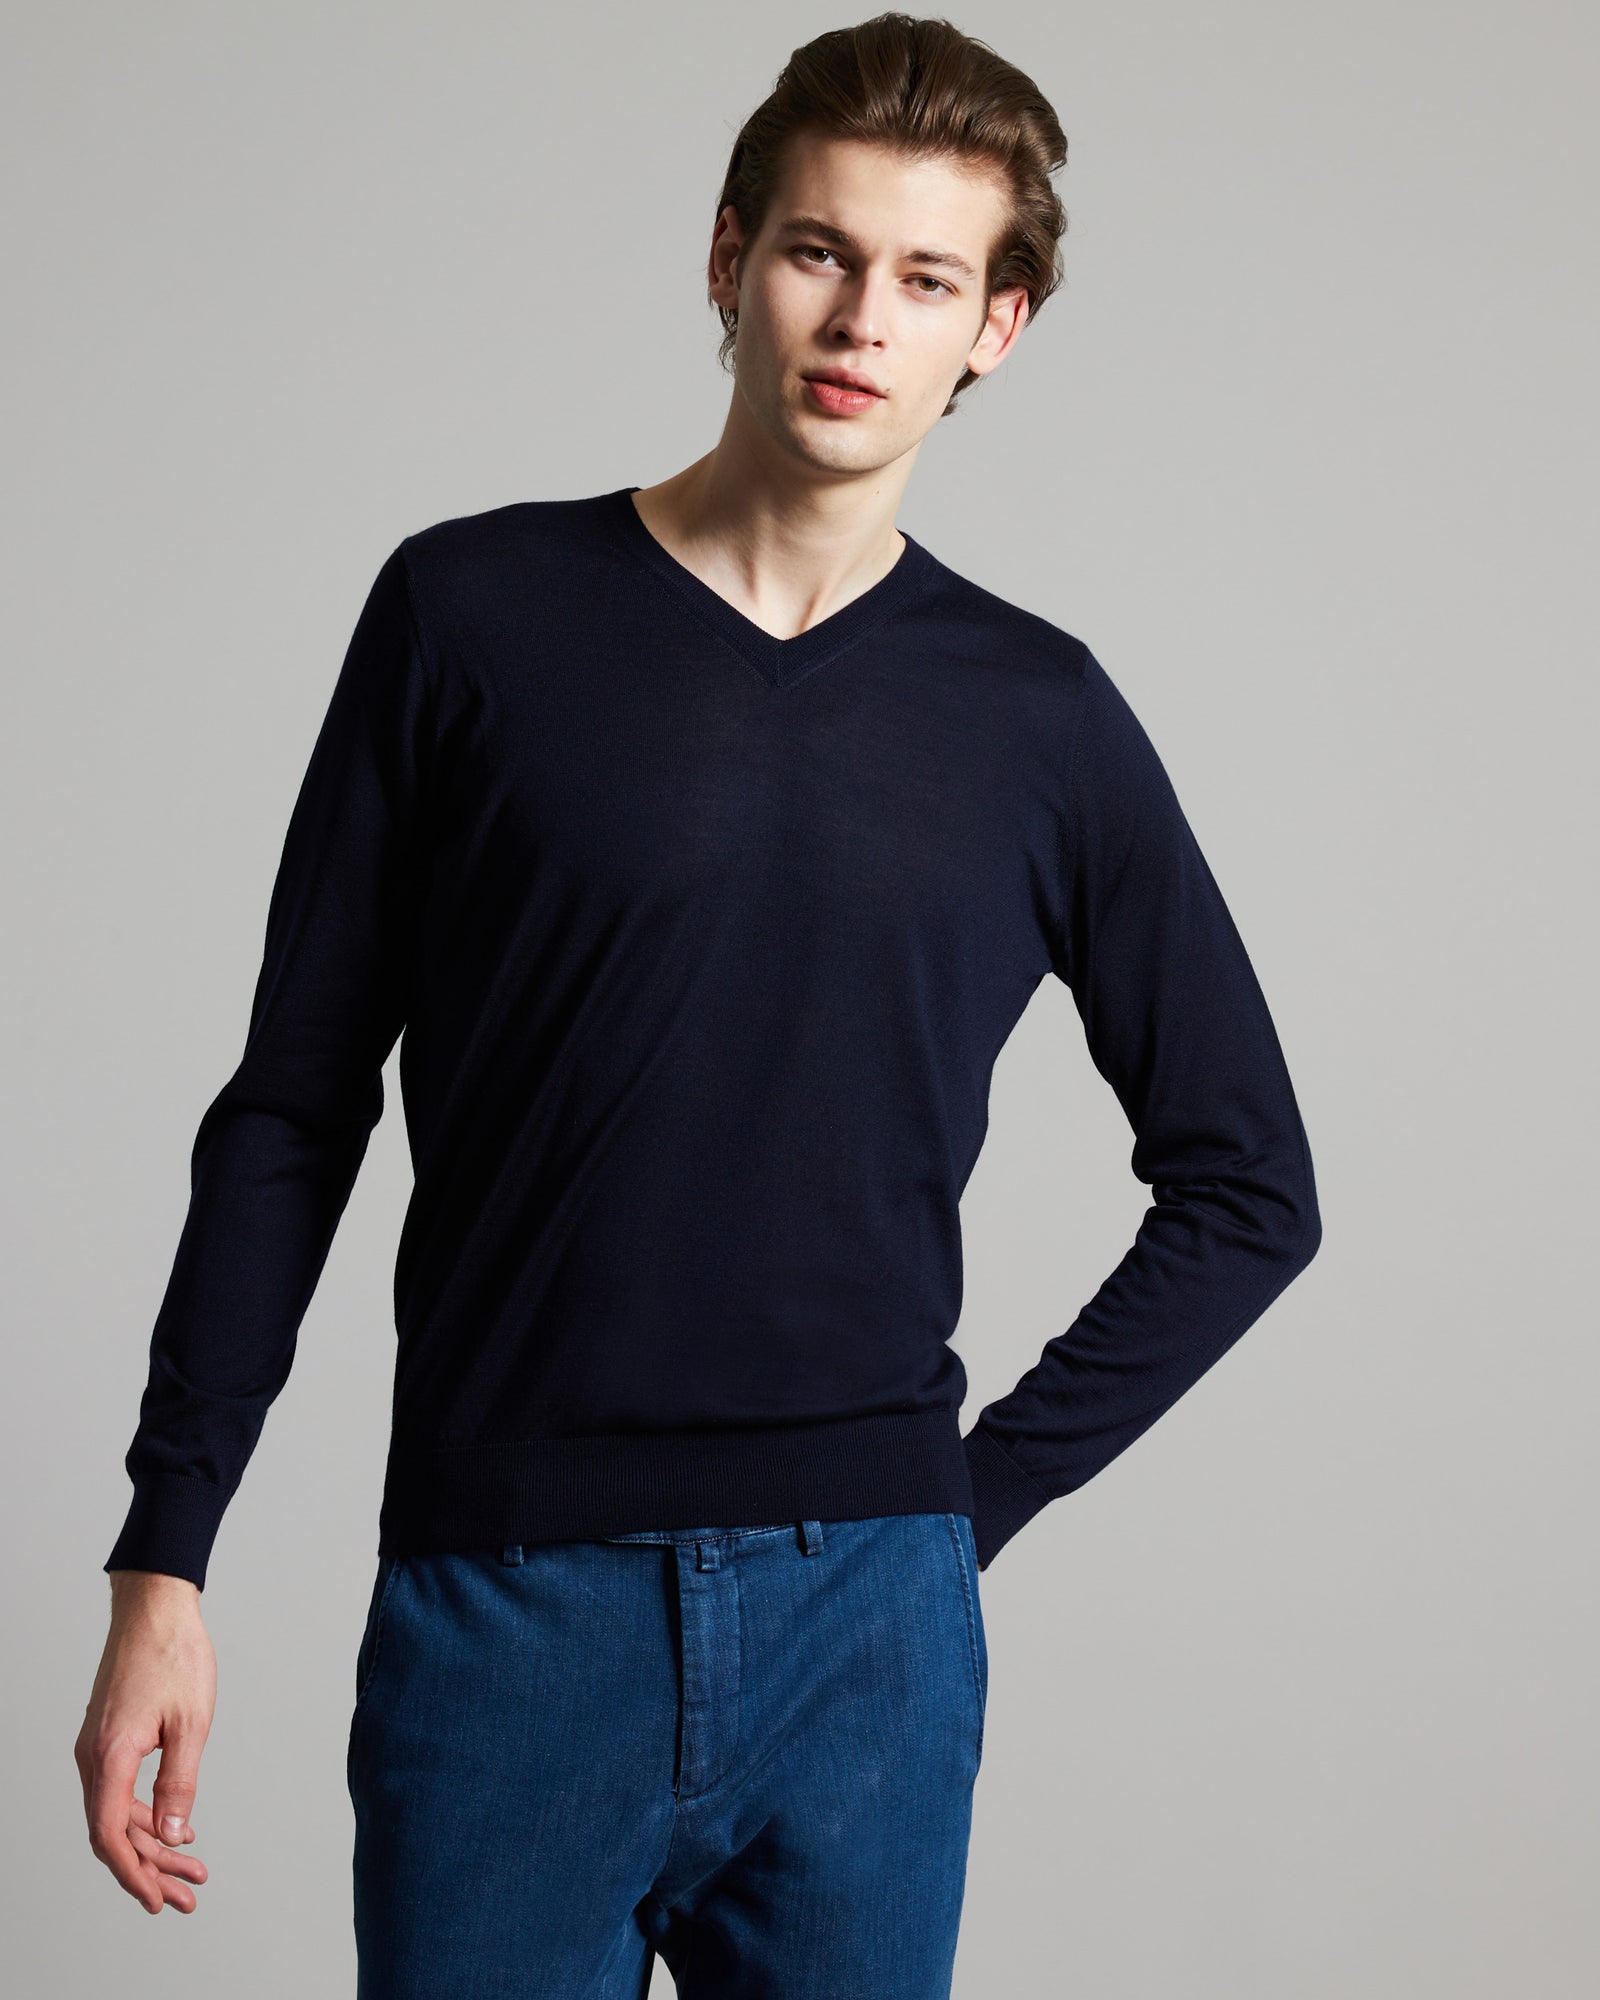 Blue cashmere and silk men's V-neck sweater